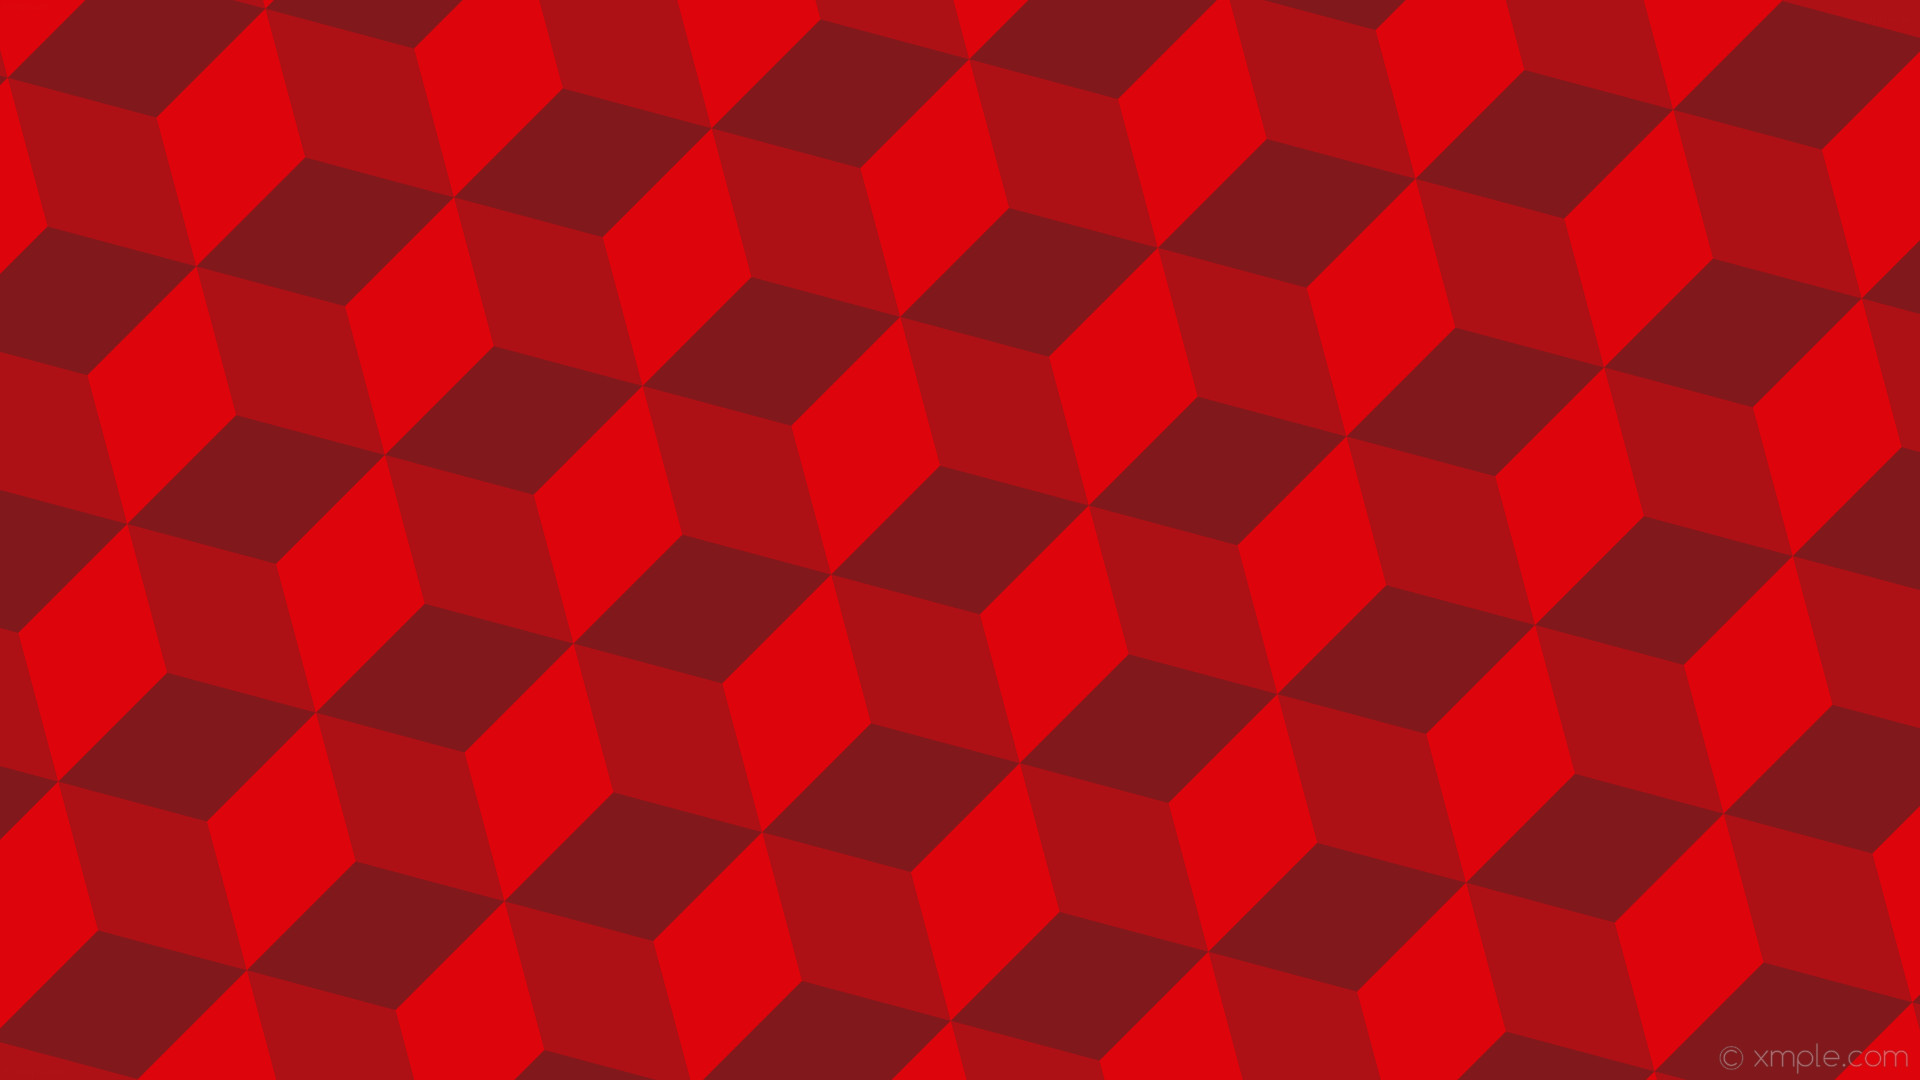 1920x1080 wallpaper 3d cubes red #81181b #ad1015 #dd040b 195Â° 154px